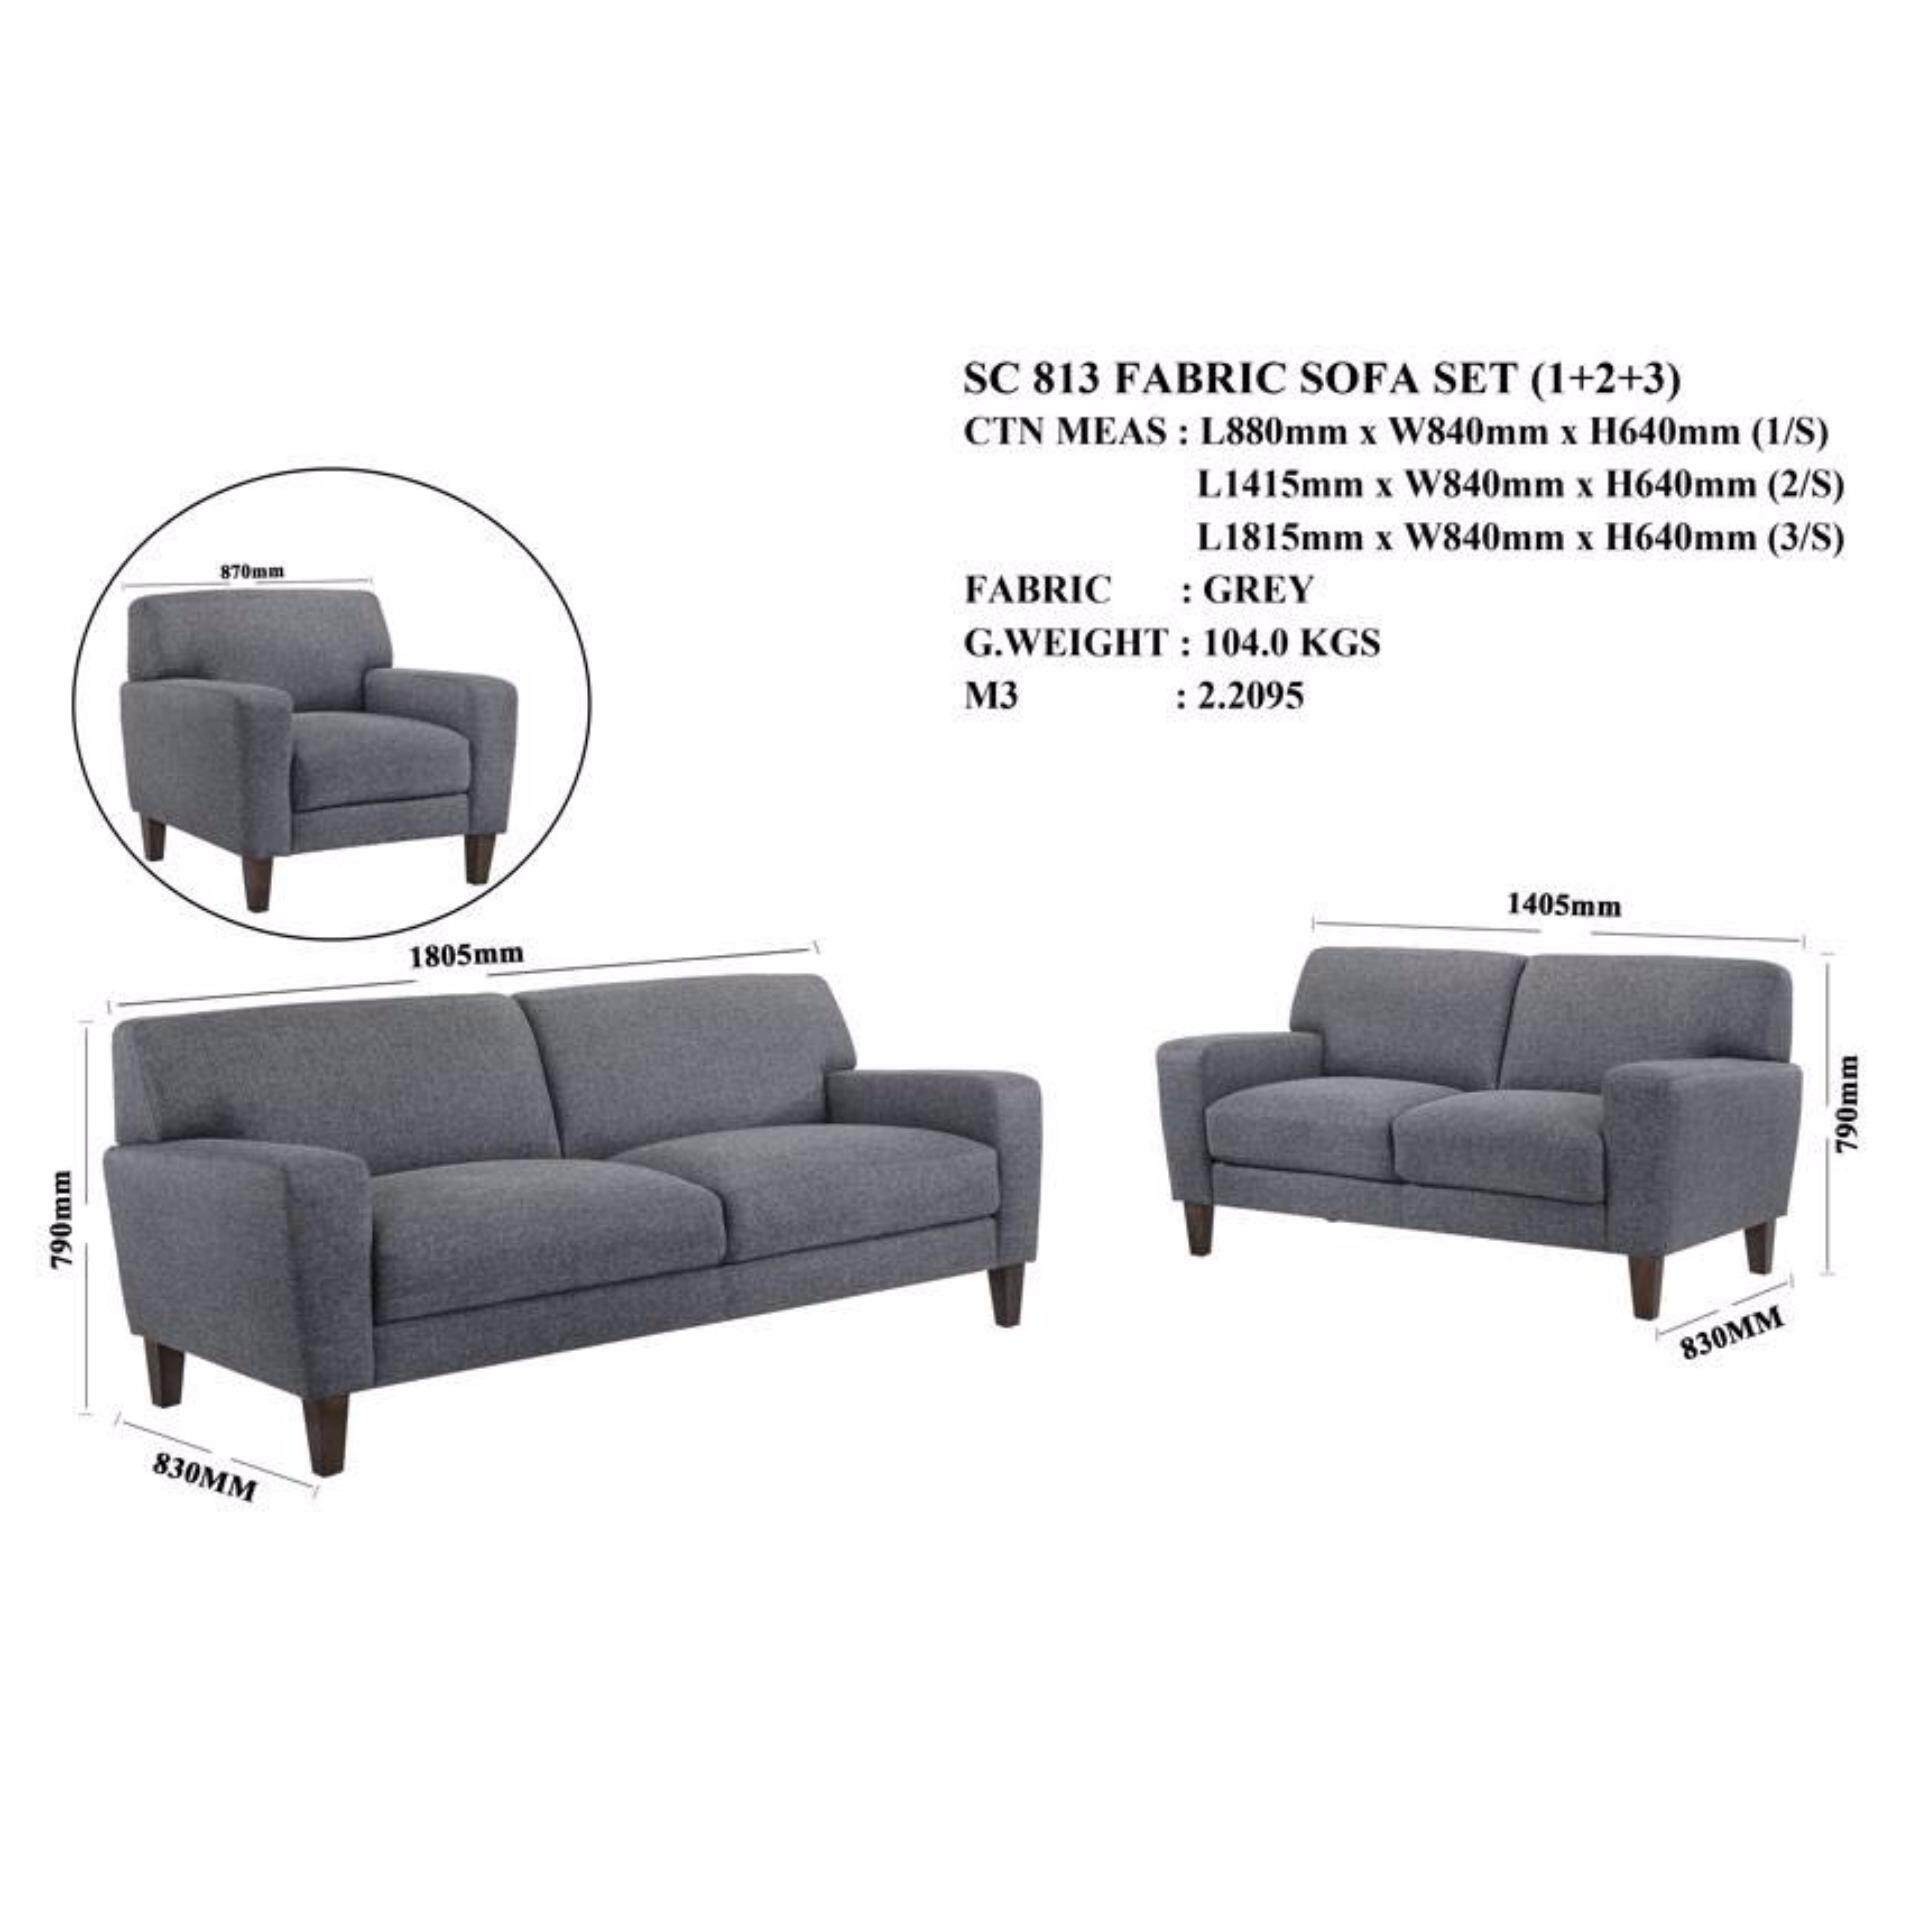 SC 813 Fabric Sofa Set 1 2 3